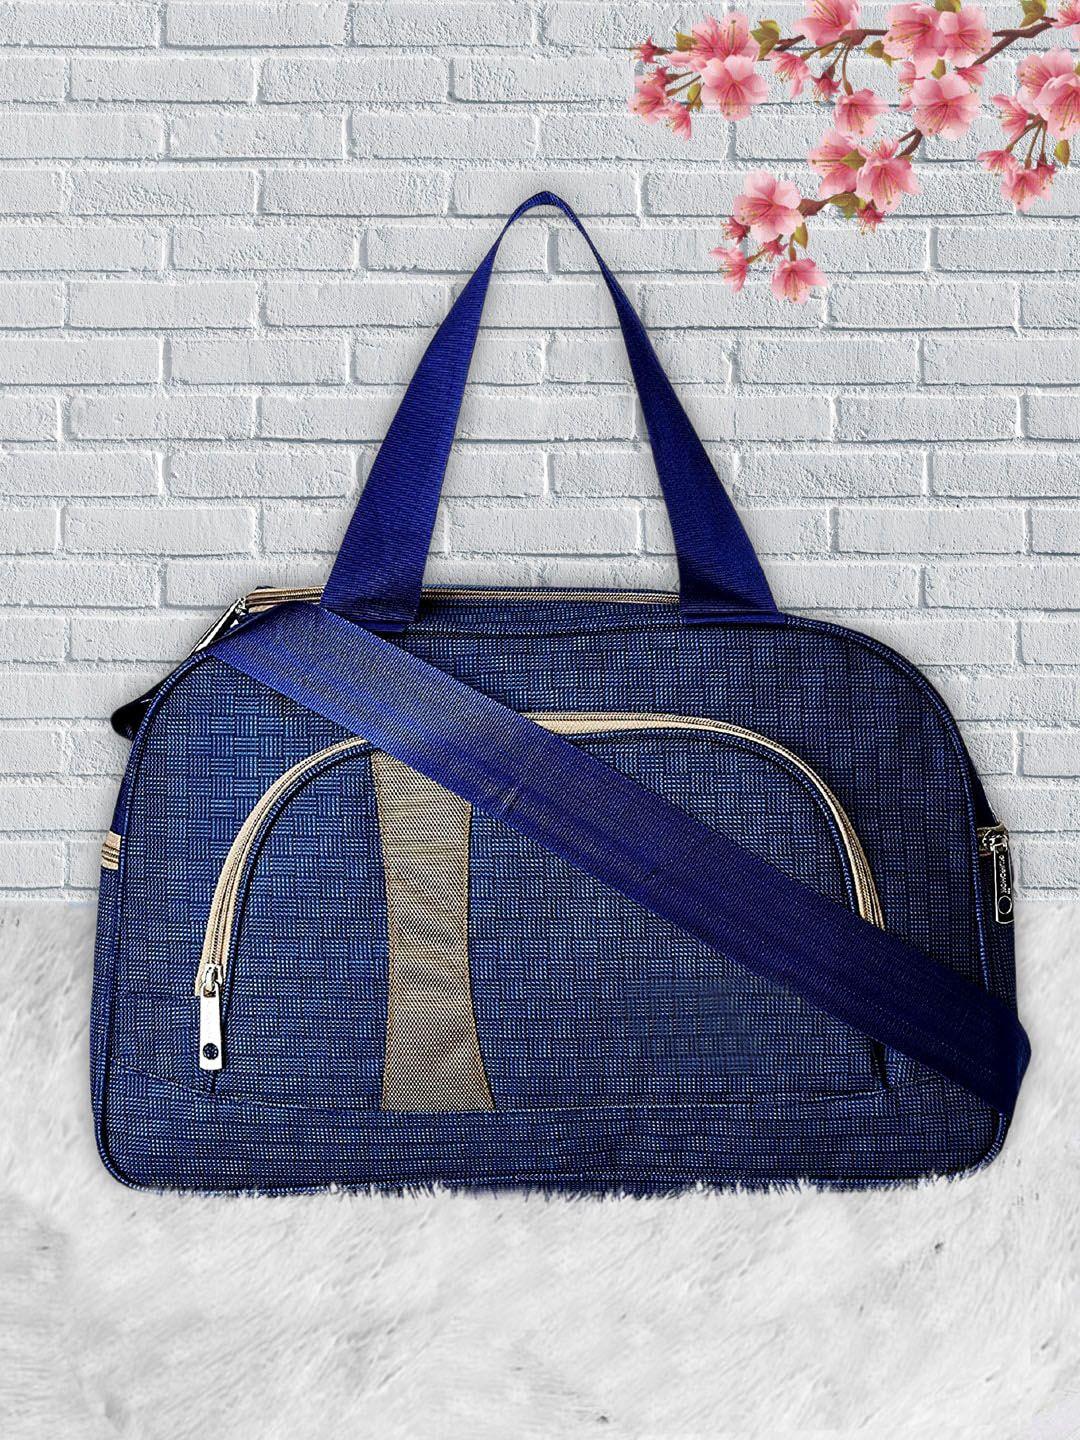 kuber industries navy blue canvas lightweight foldable duffle bag